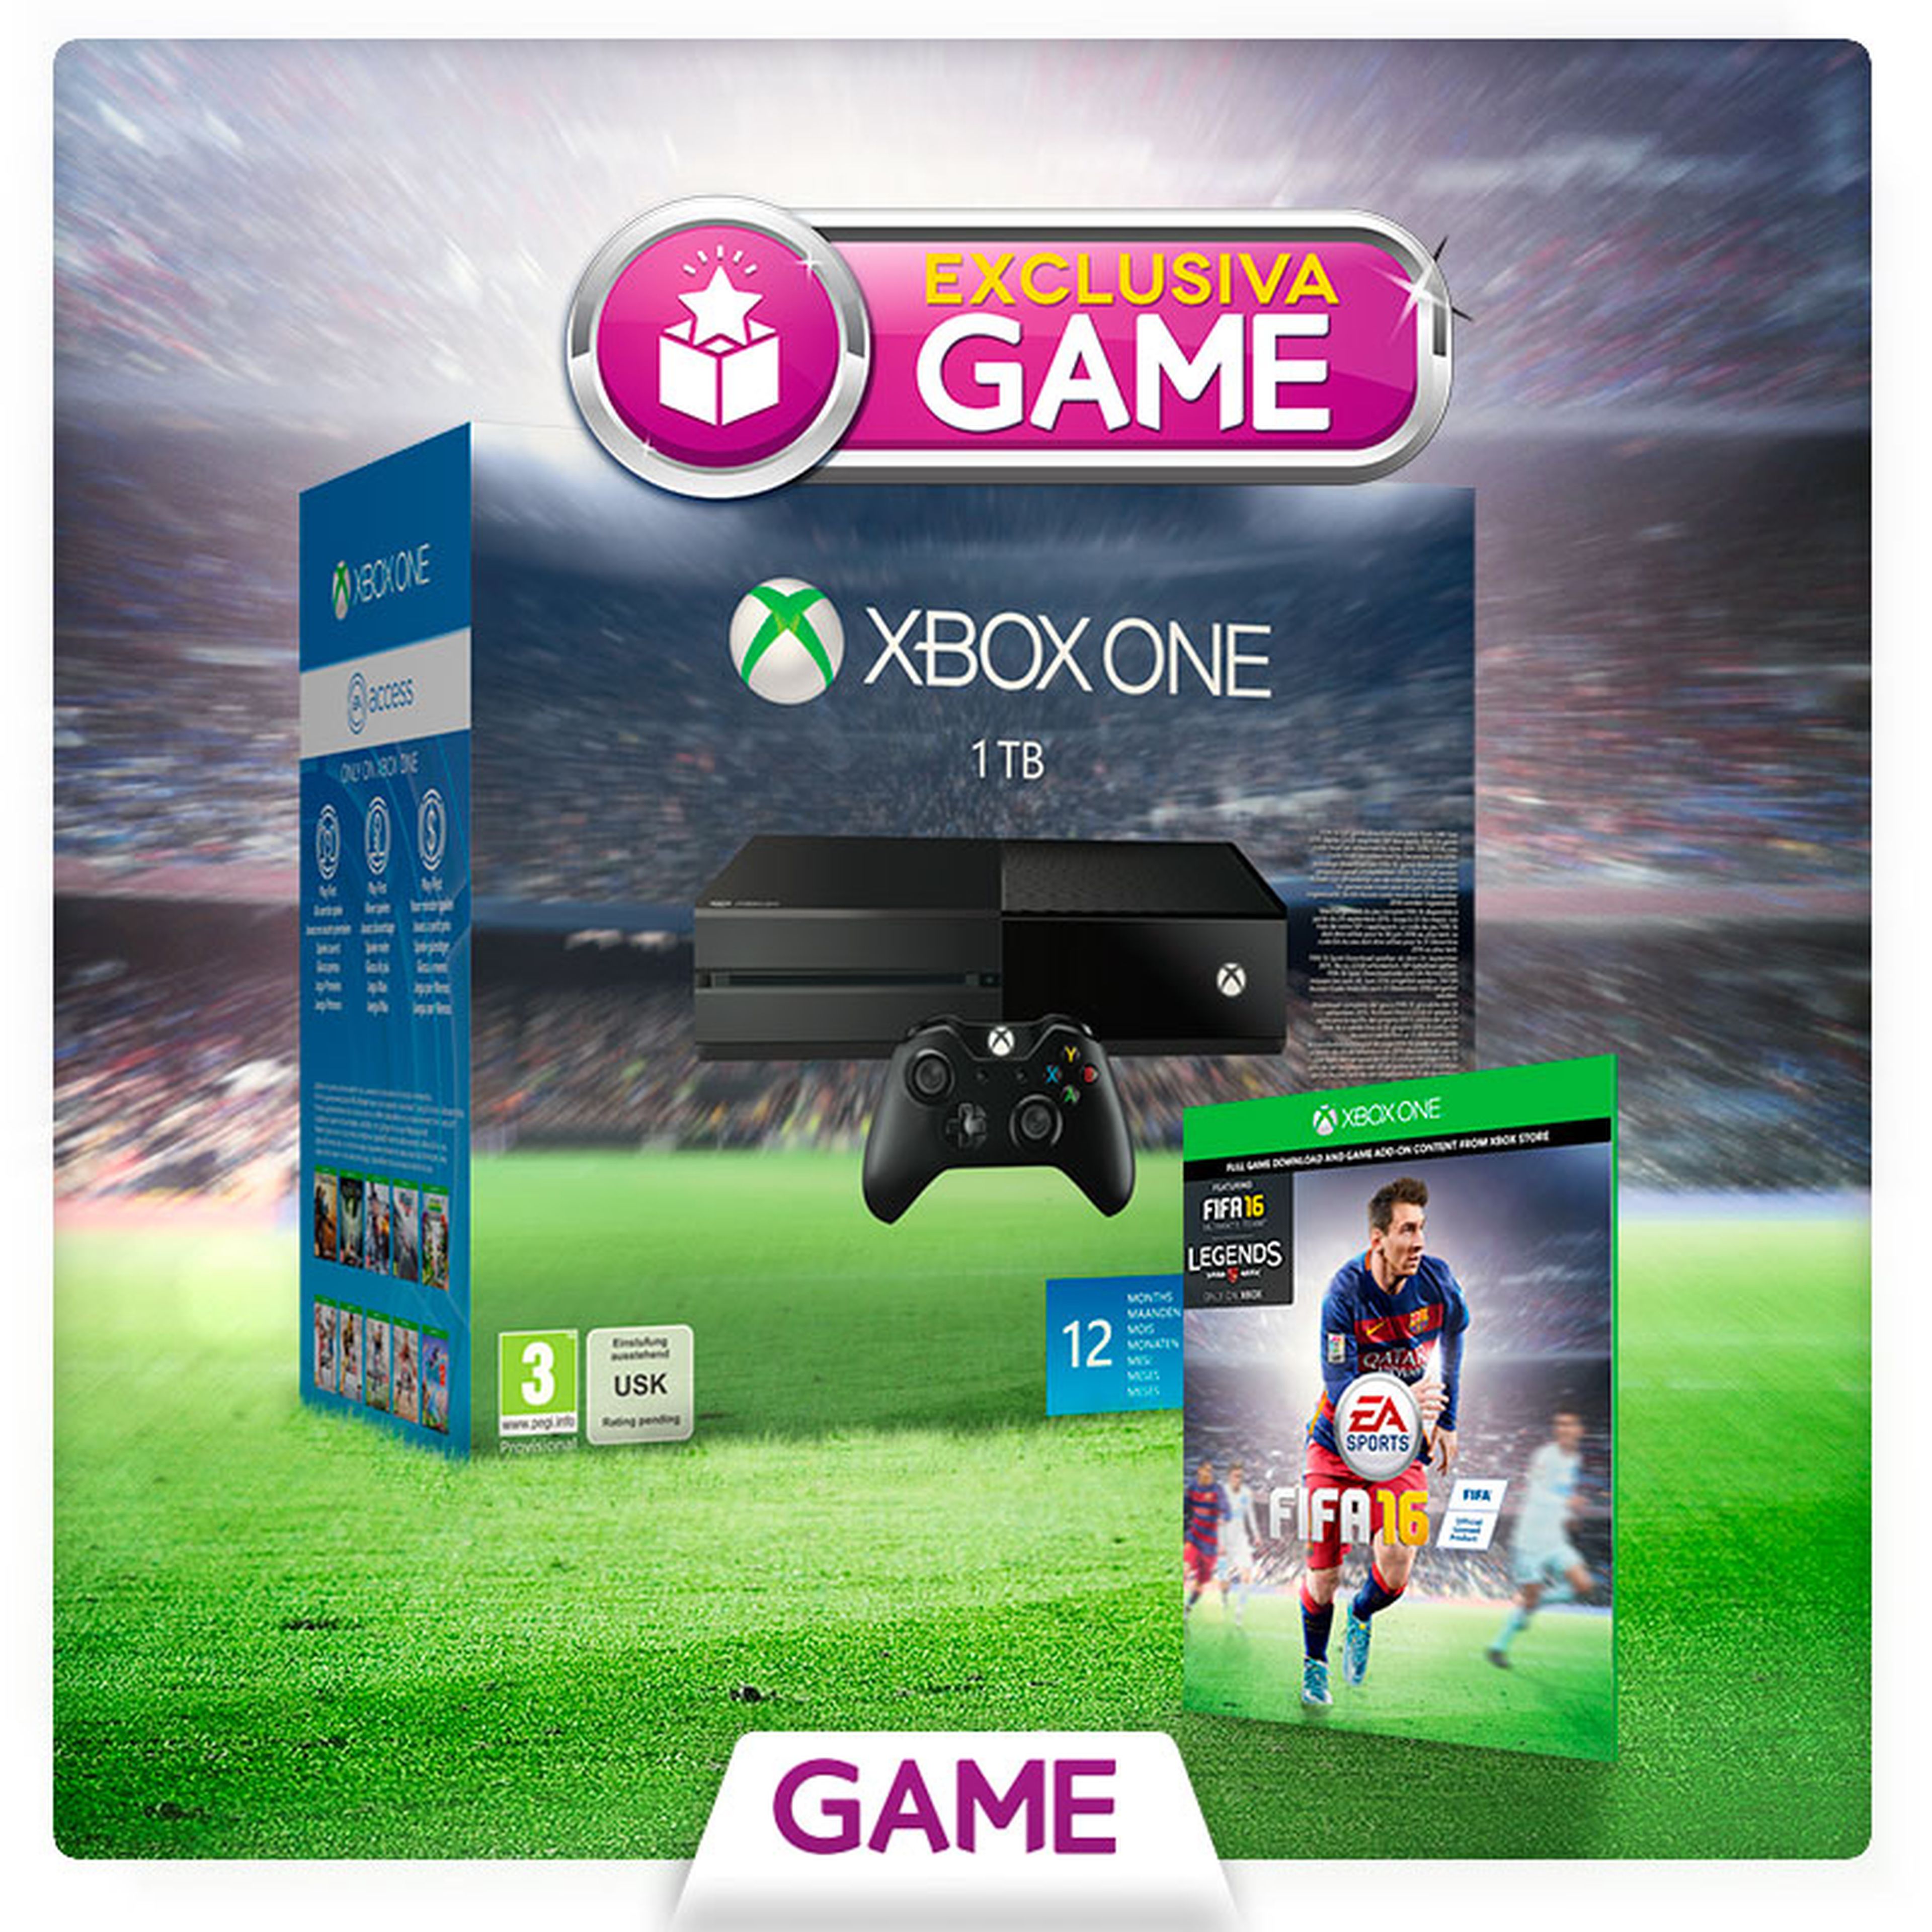 Xbox One de 1 TB con FIFA 16, pack exclusivo de GAME